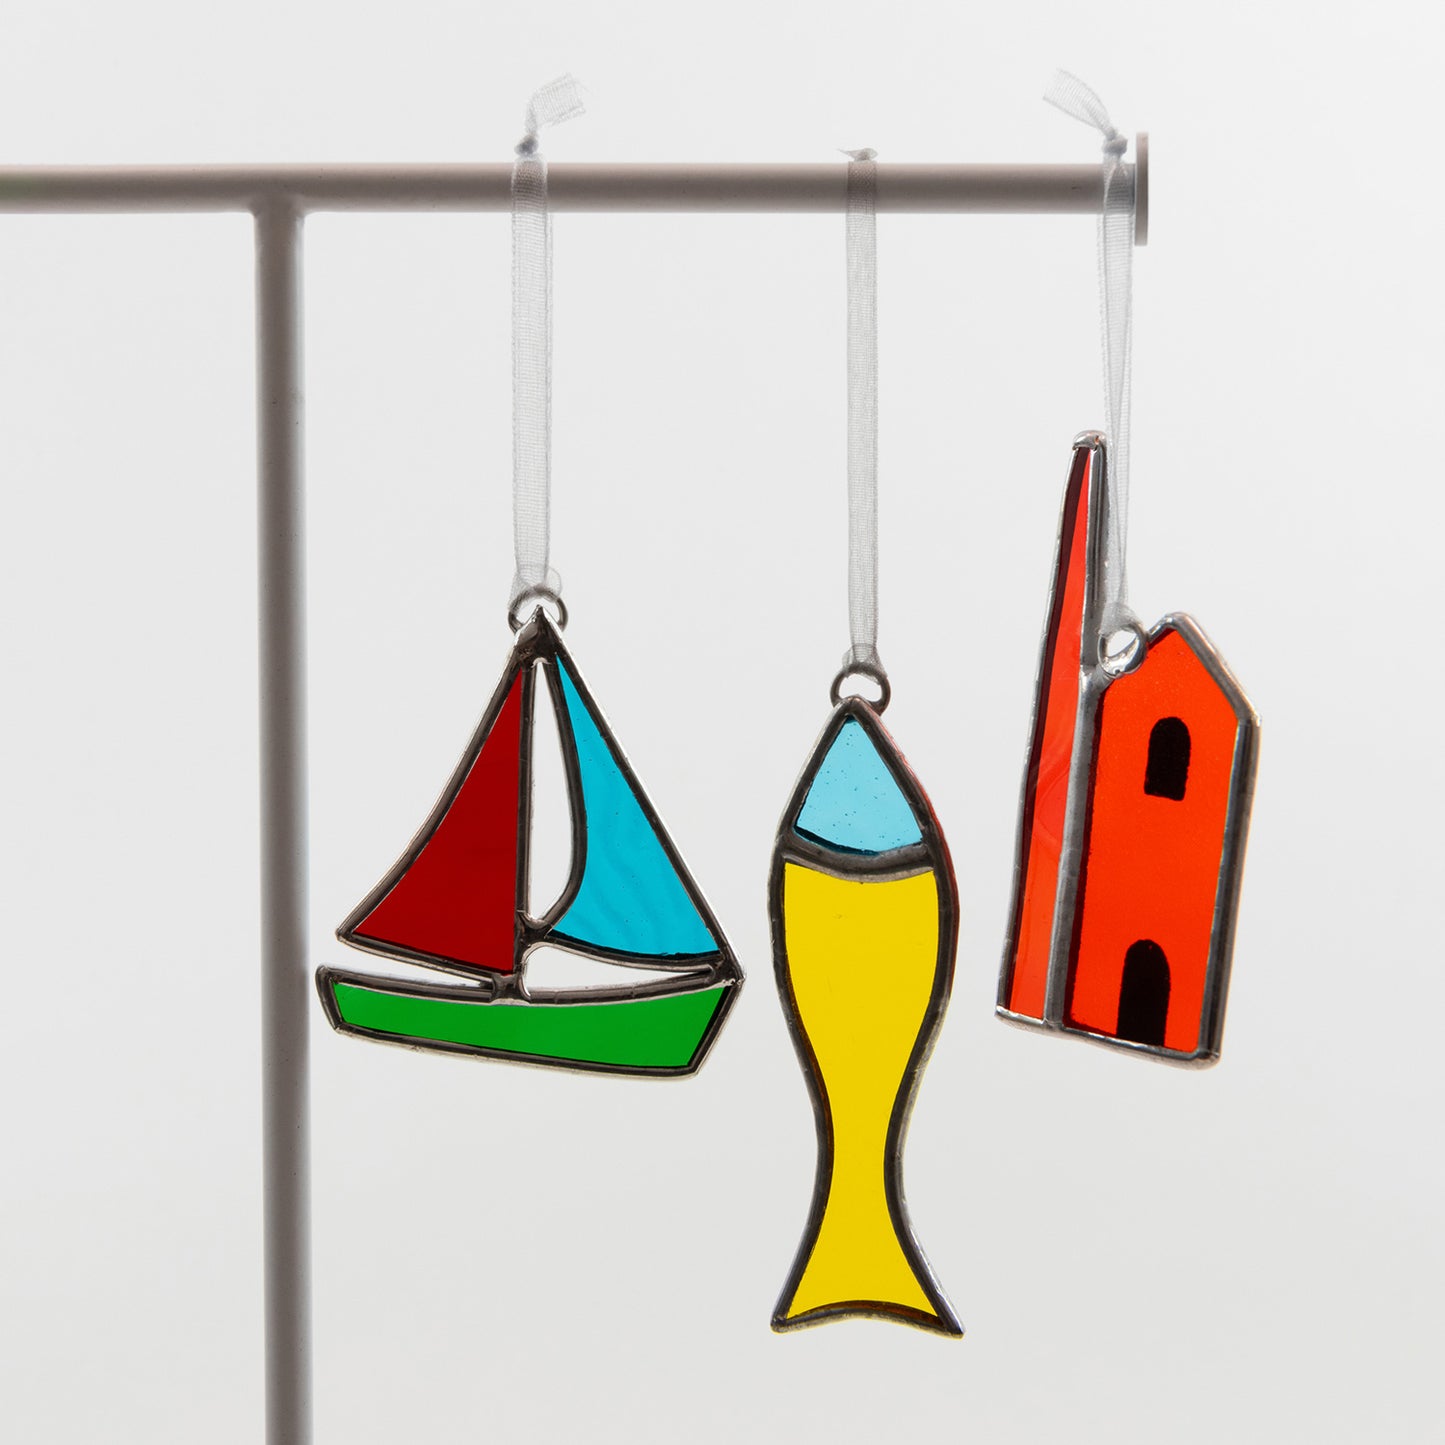 The glass sailboat decoration hanging alongside the glass fish decoration and the glass engine house decoration.